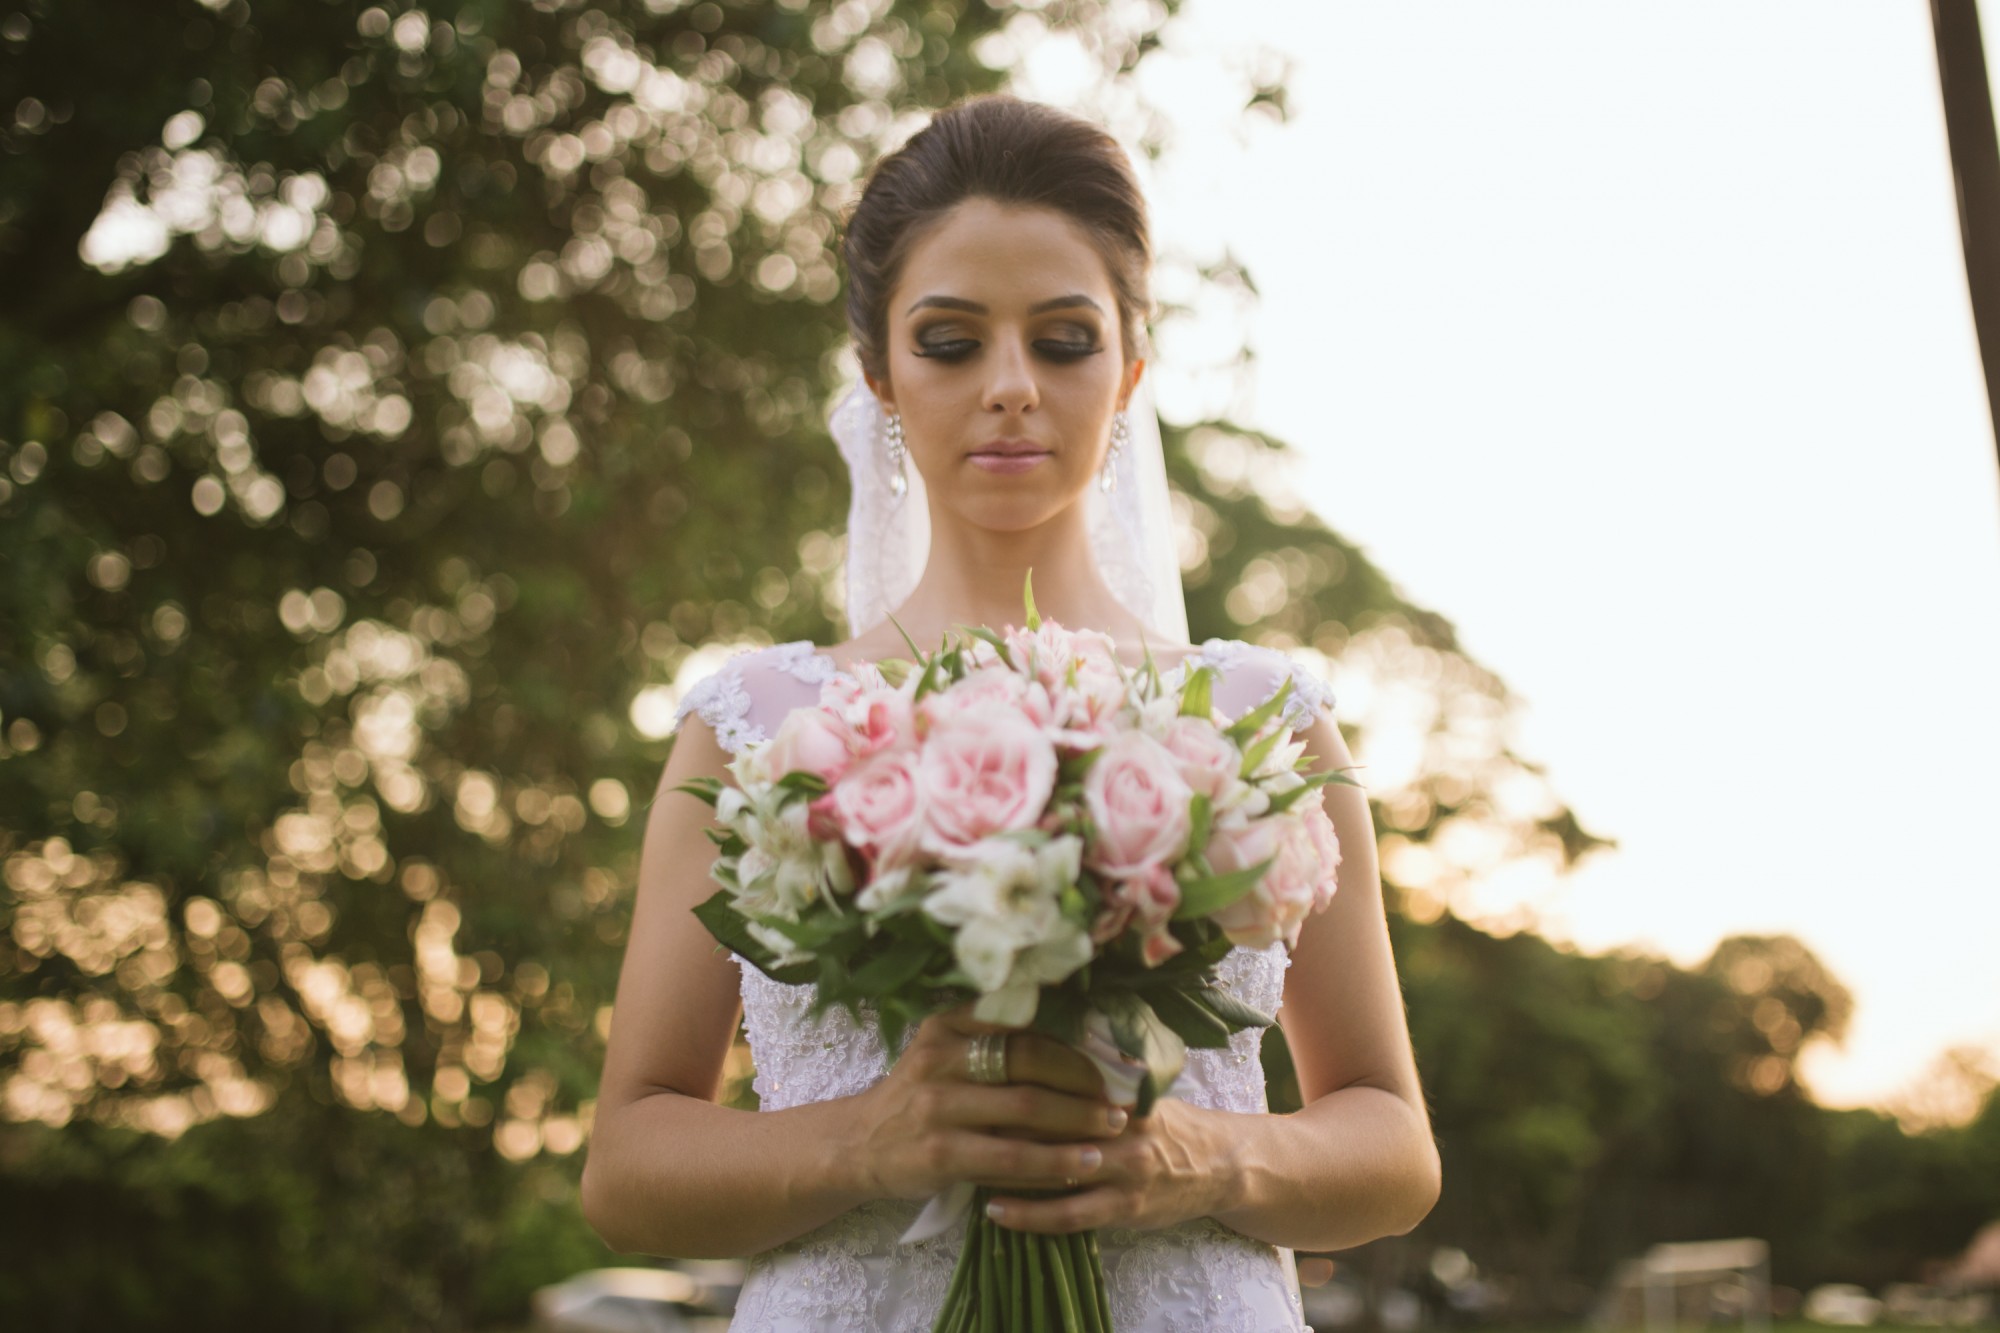 Maiara Kuki e Ricardo - Casamento em Palotina - PR por Lorran Souza e Léia Sotile - fotografo de casamentos00016